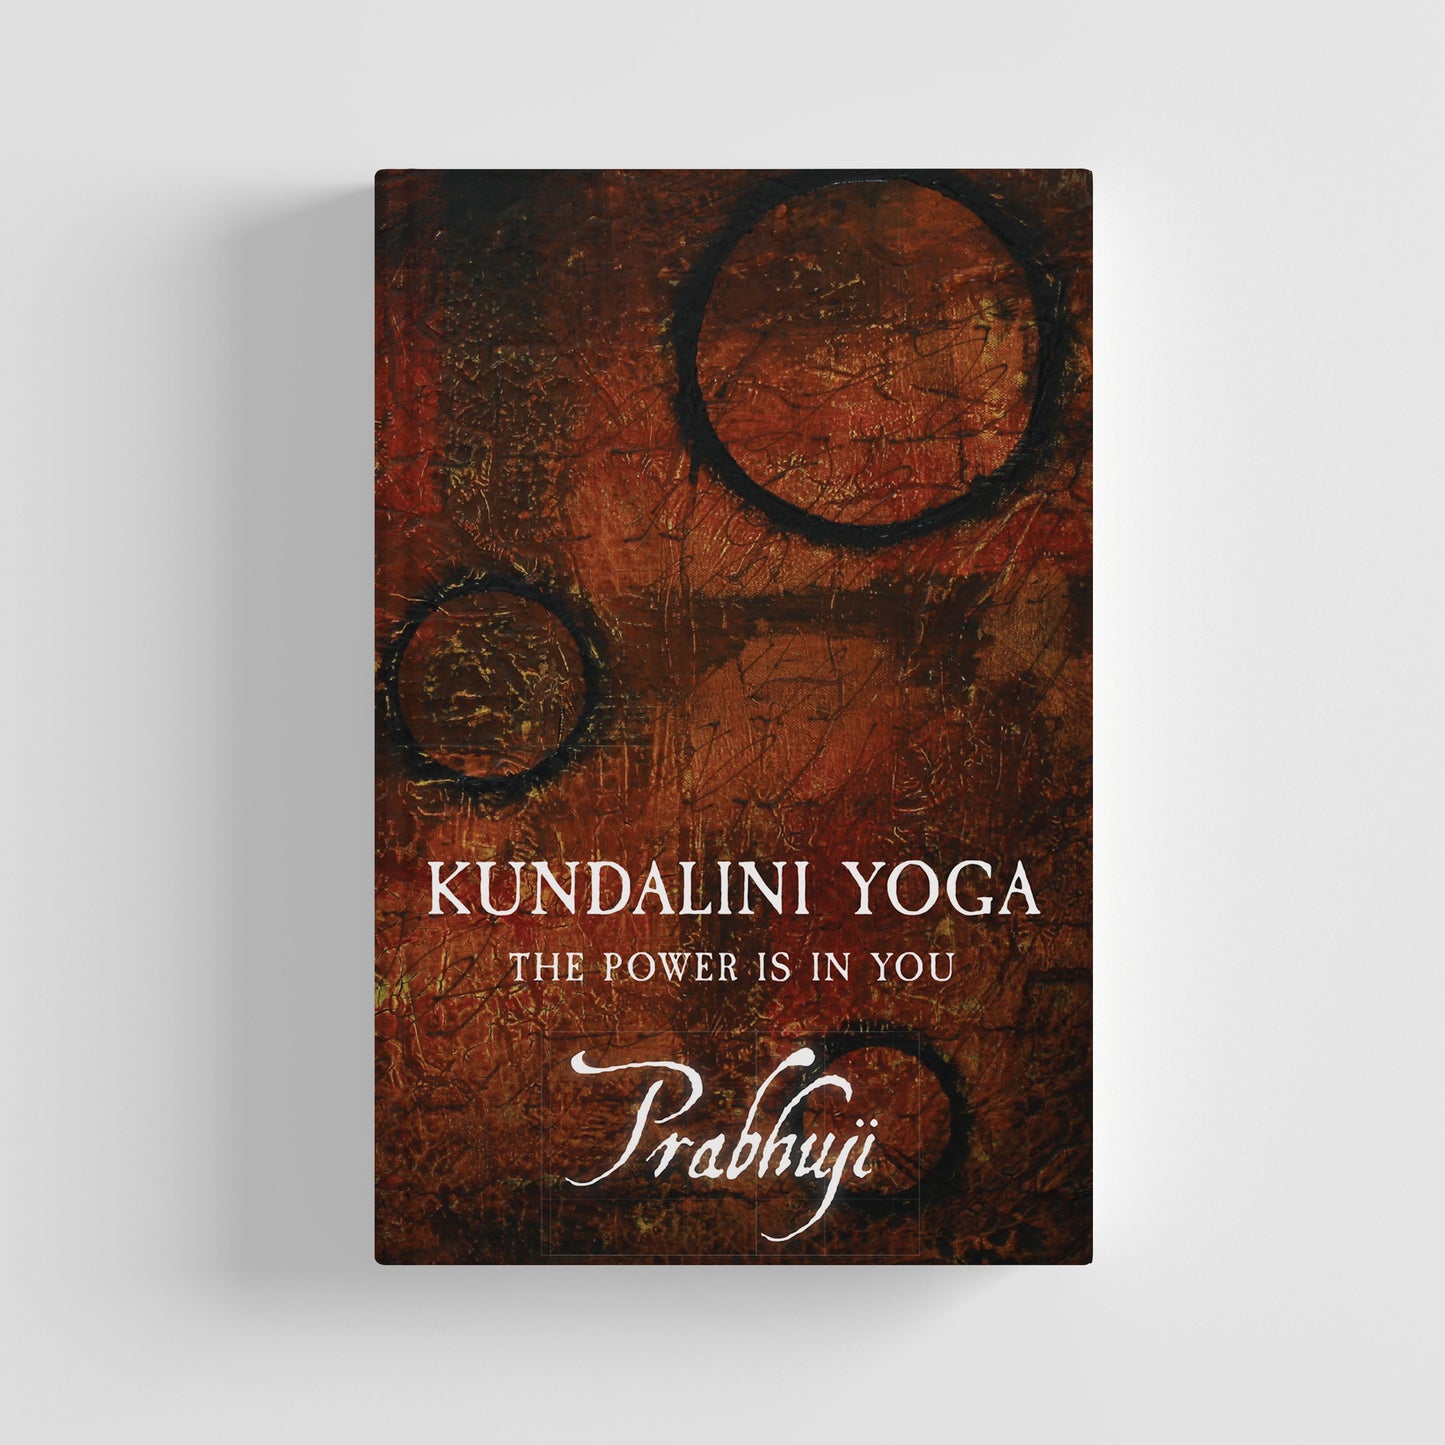 Book Kundalini yoga - the power is in you by Prabhuji (Hard cover - English)